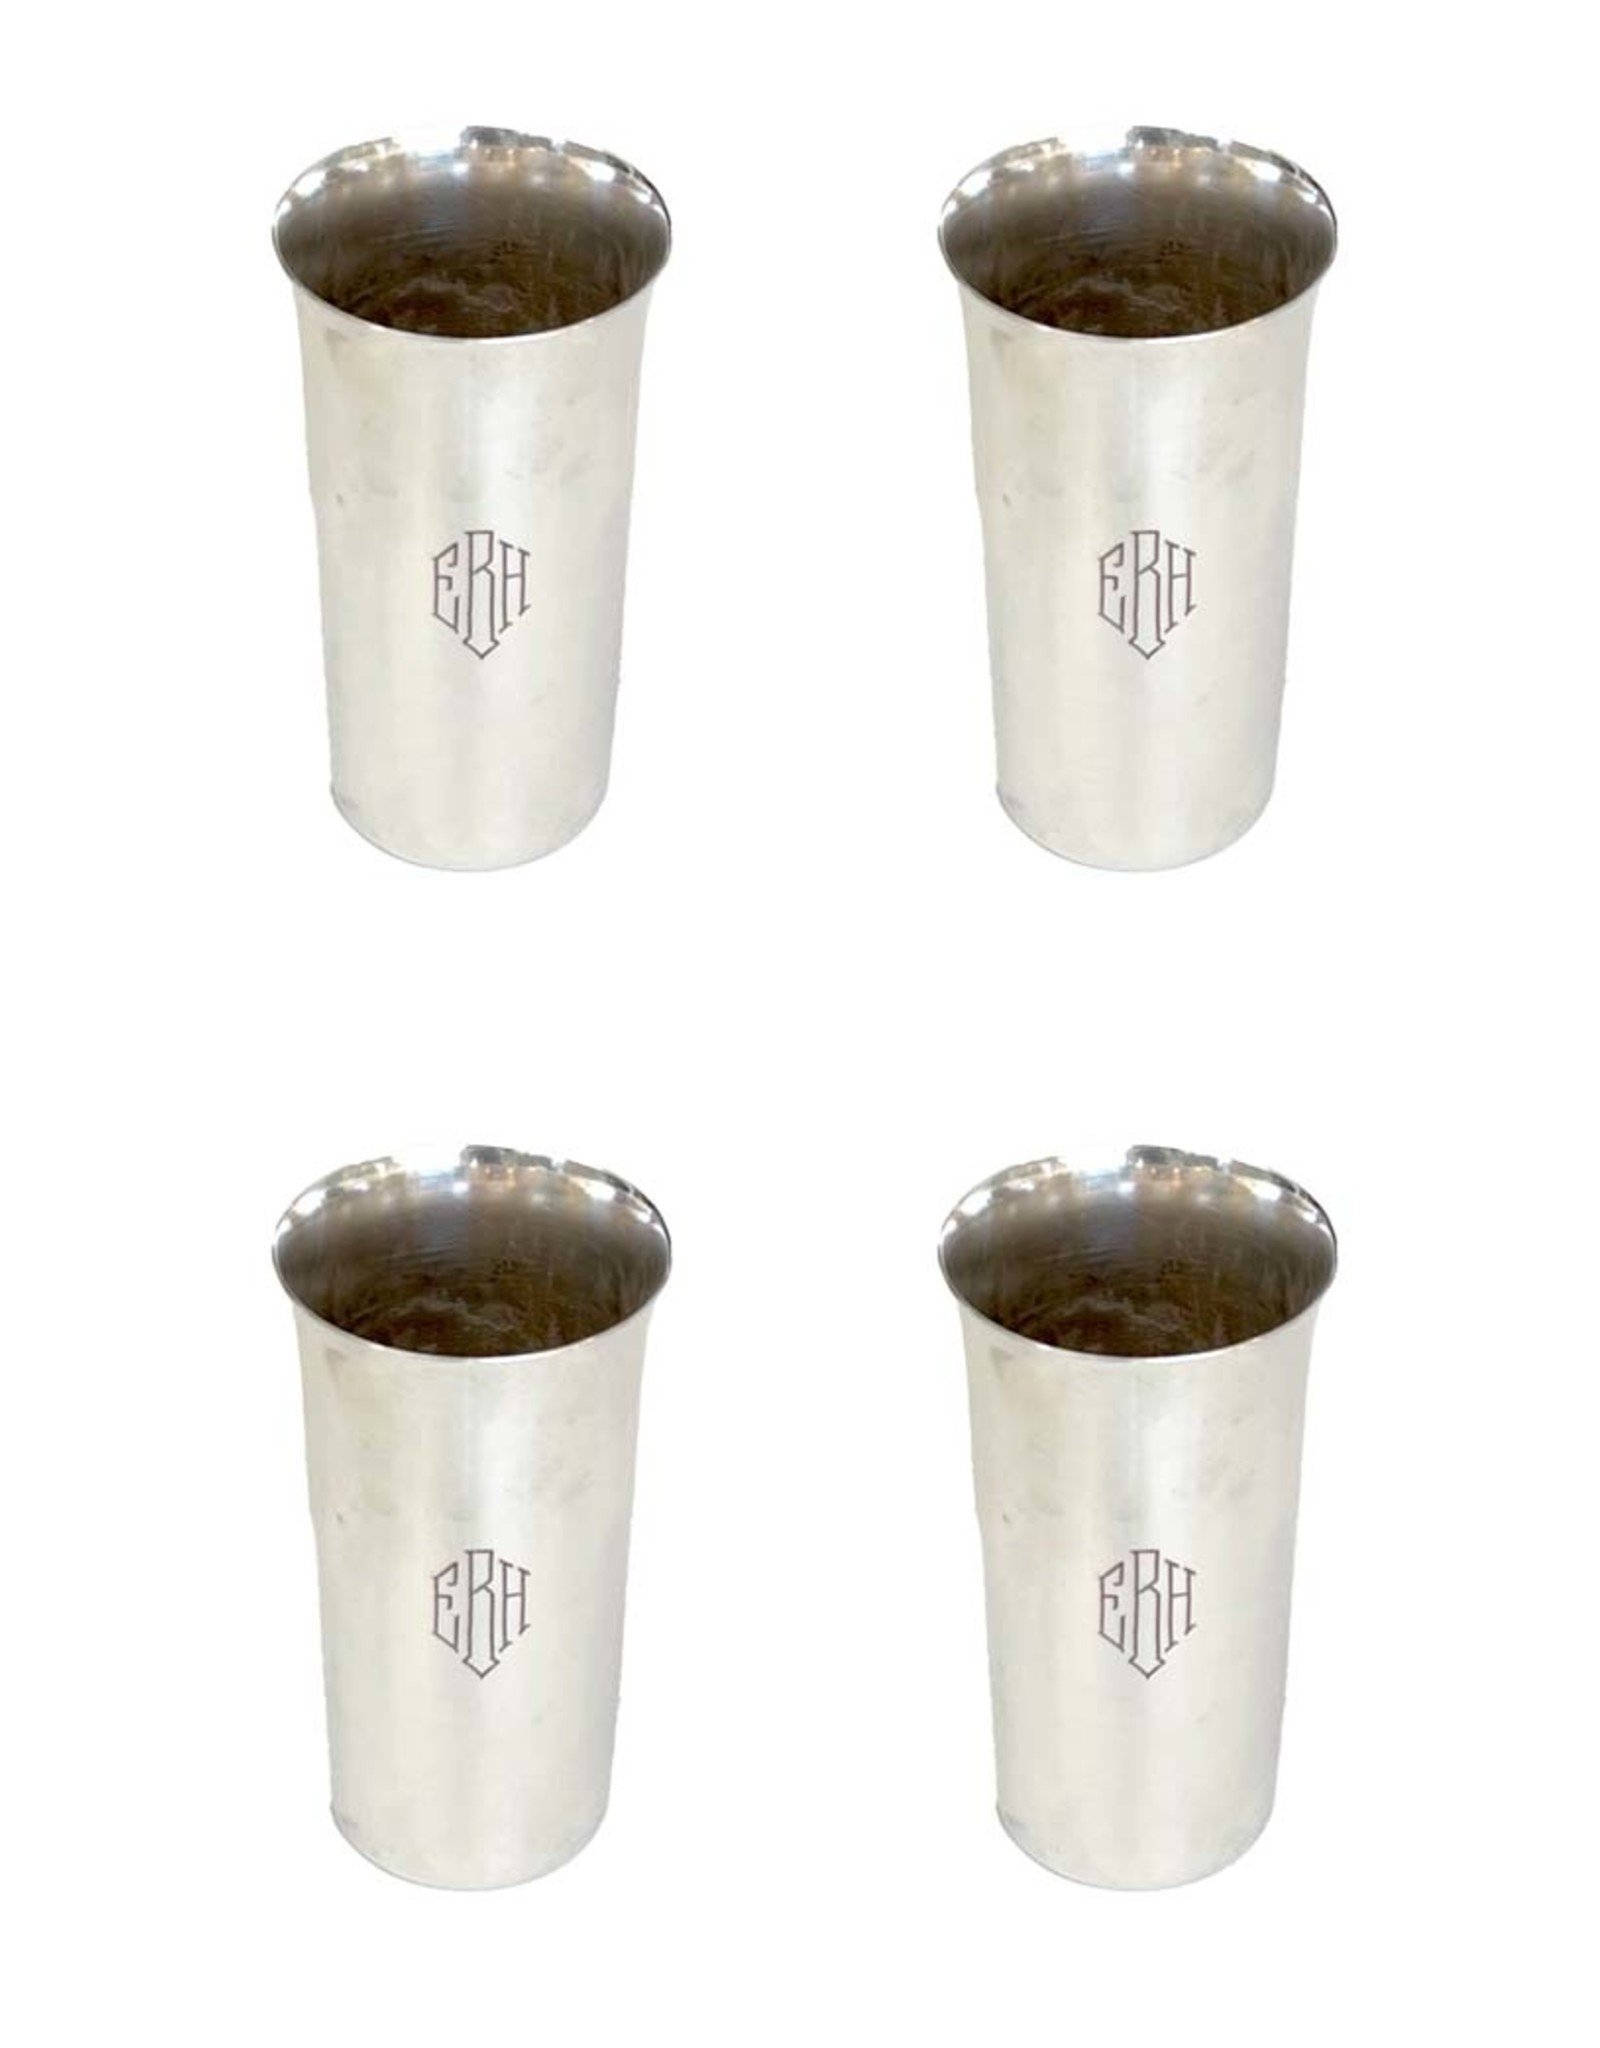 Vintage Silver Monogramed Cup - Set of 4